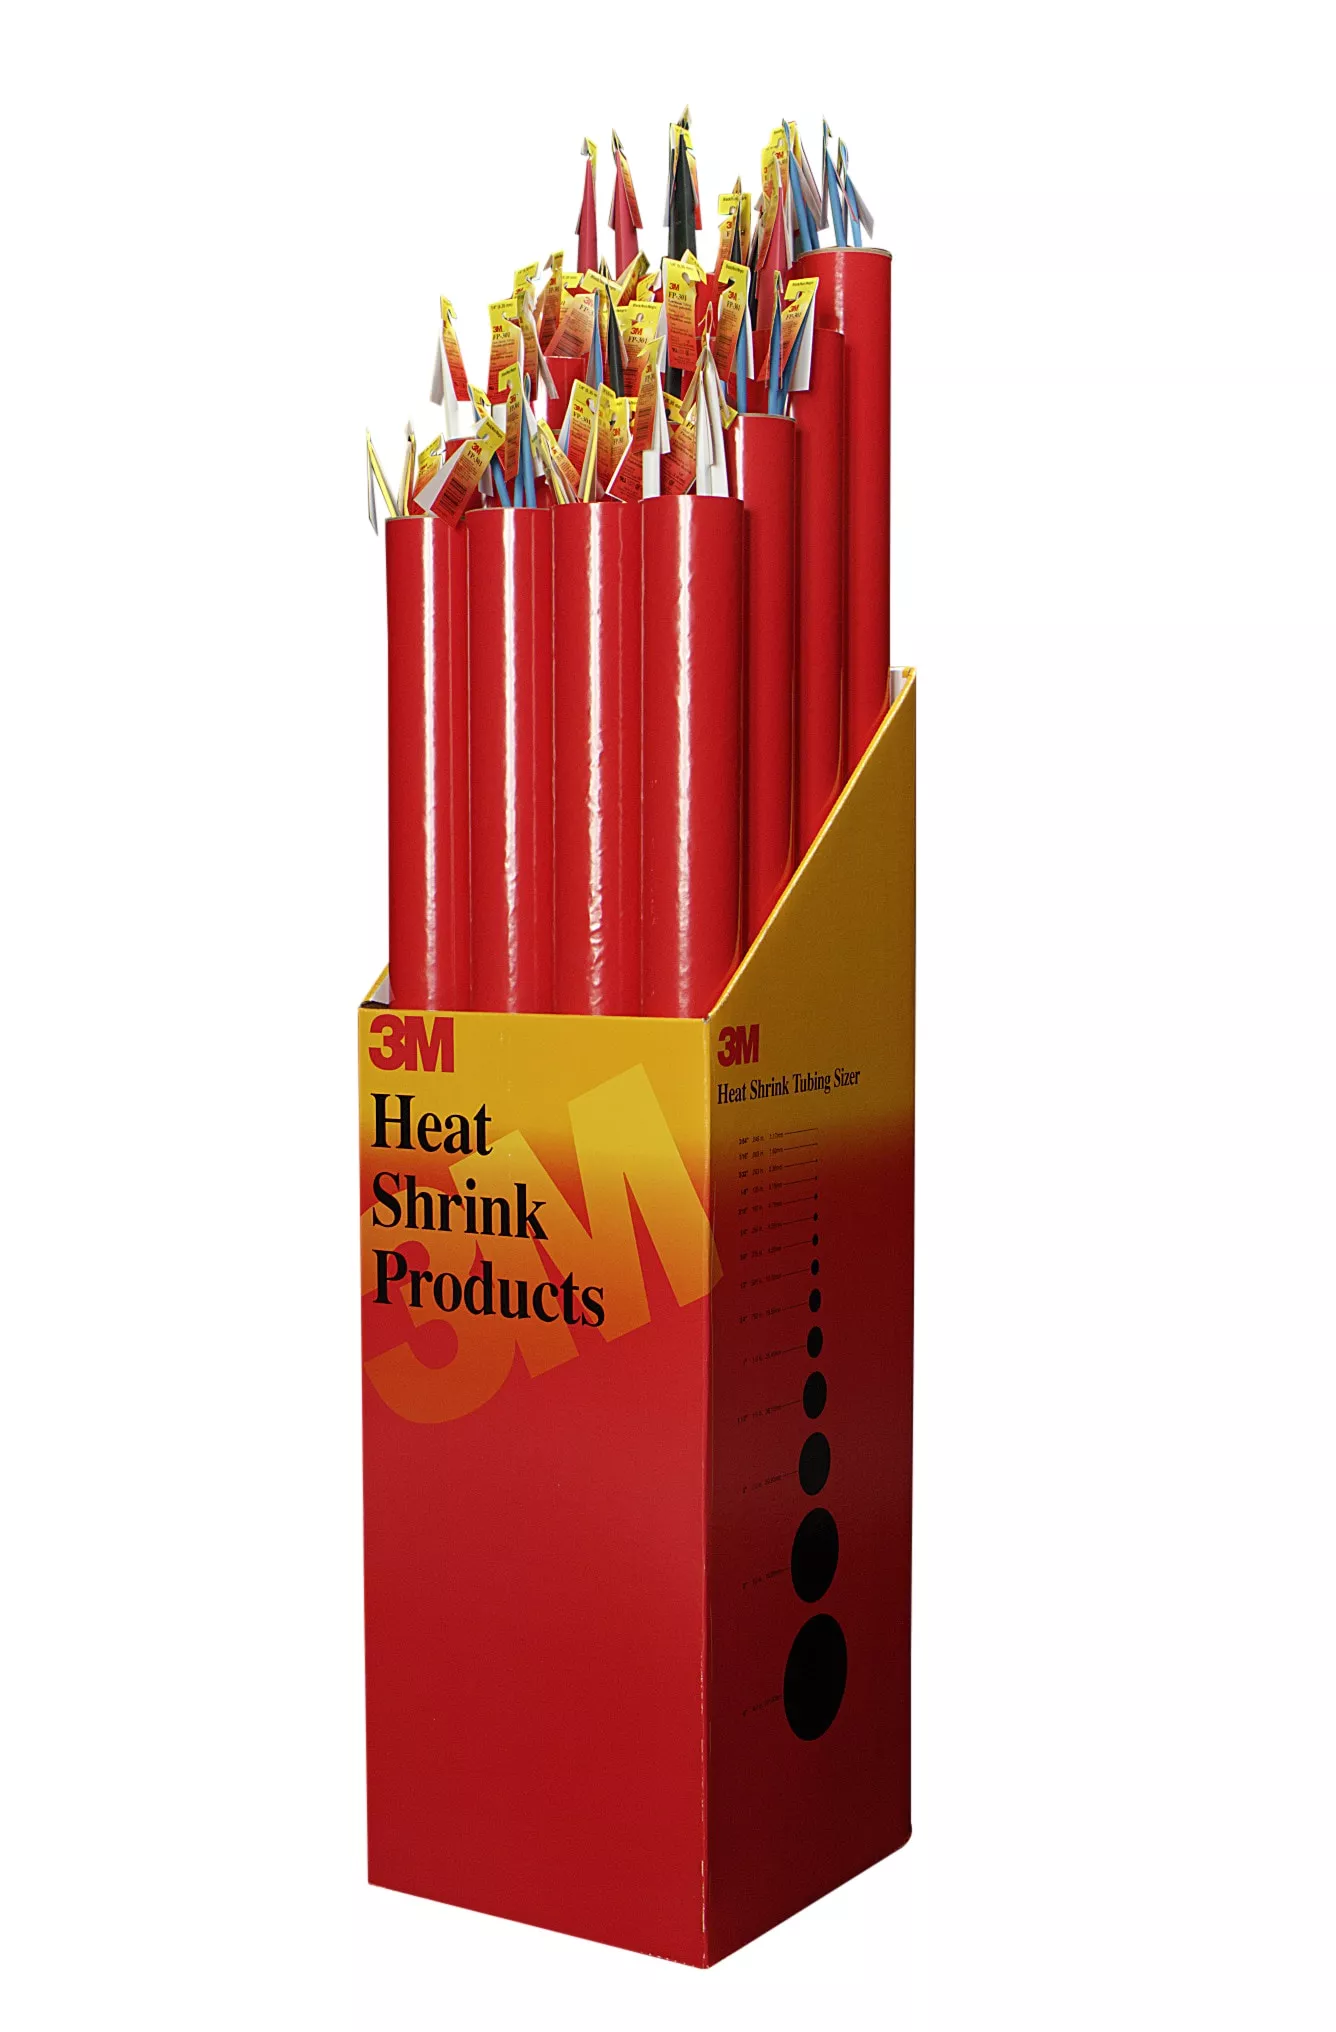 SKU 7000133620 | 3M™ Modified Polyvinylidene Flouride Heat Shrink Tubing
MFP-1/8-48-Clear-Bulk: 4 ft length sticks